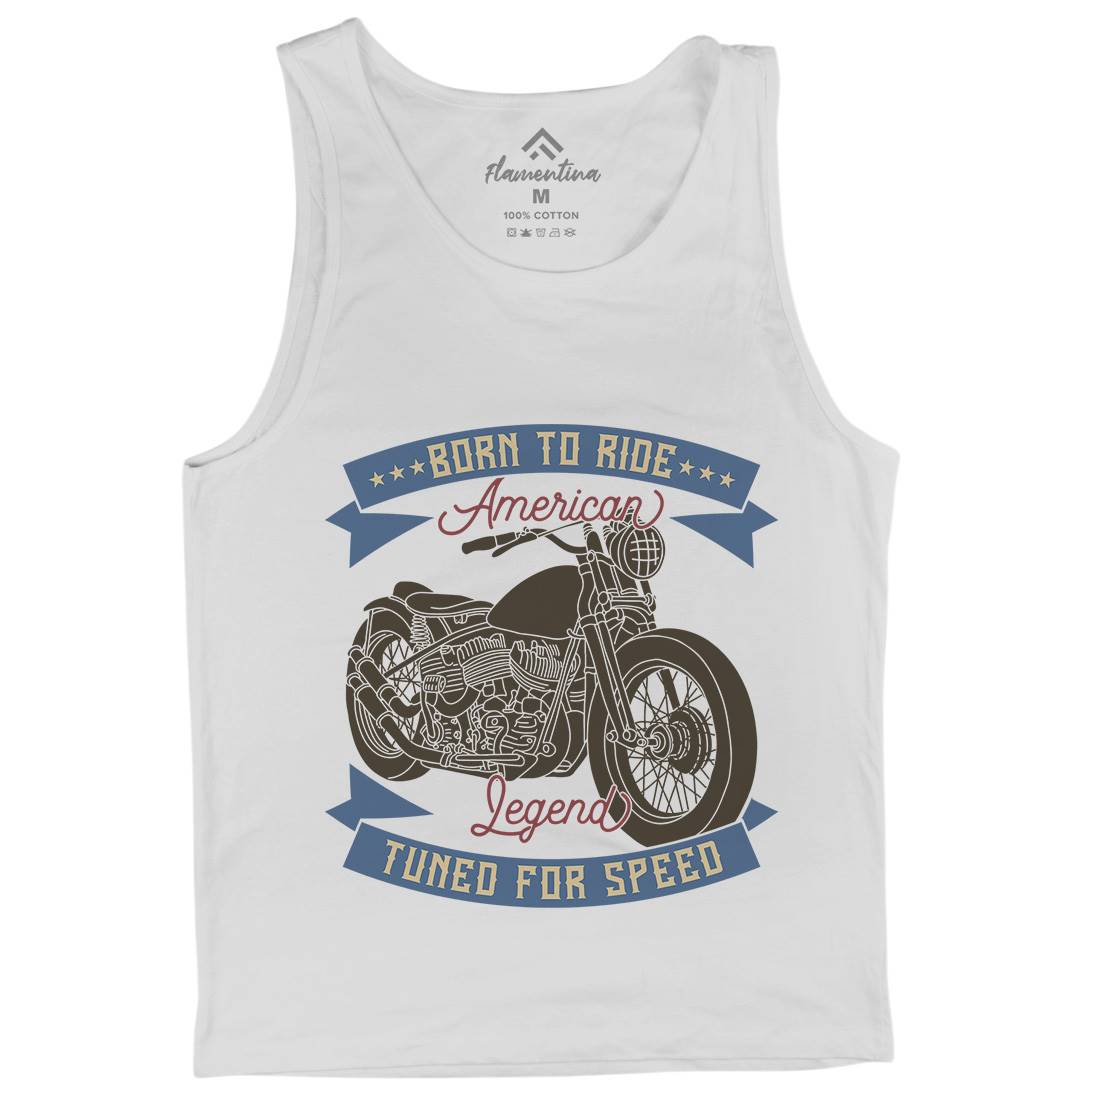 Legend Mens Tank Top Vest Motorcycles B322